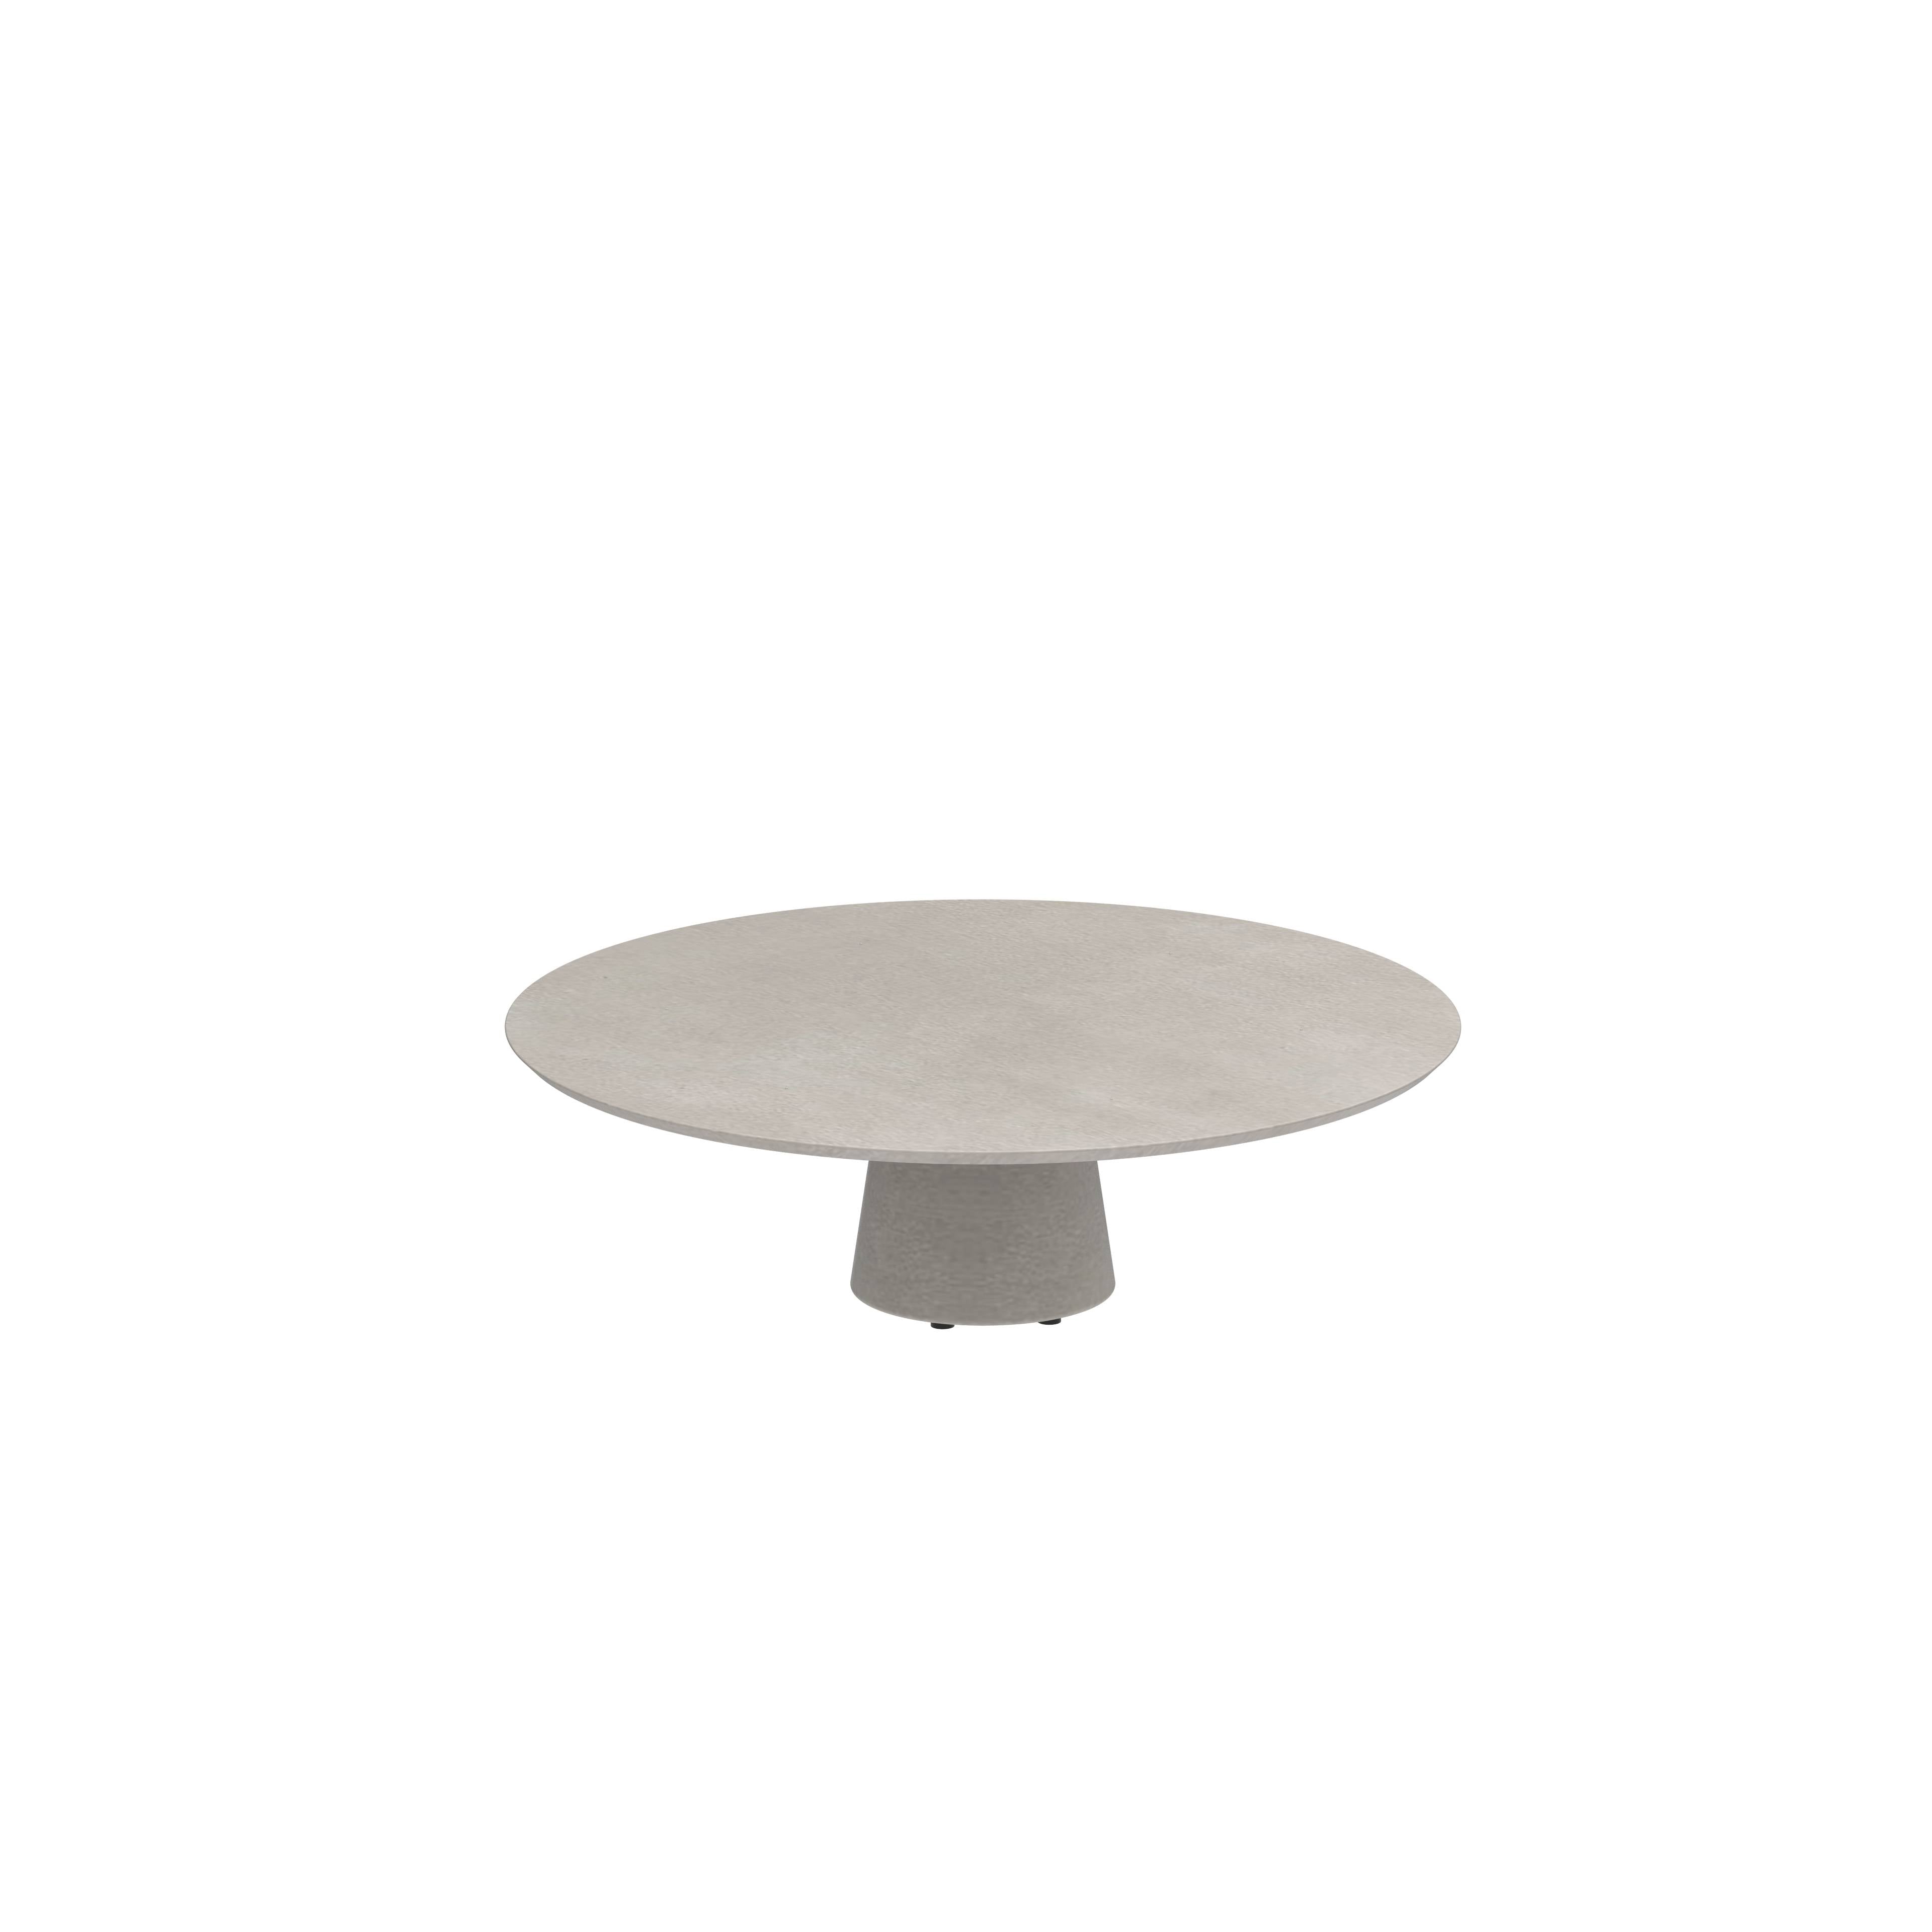 Conix Table Round Ø 160cm High Lounge Leg Concrete Cement Grey - Tabletop Concrete Cement Grey